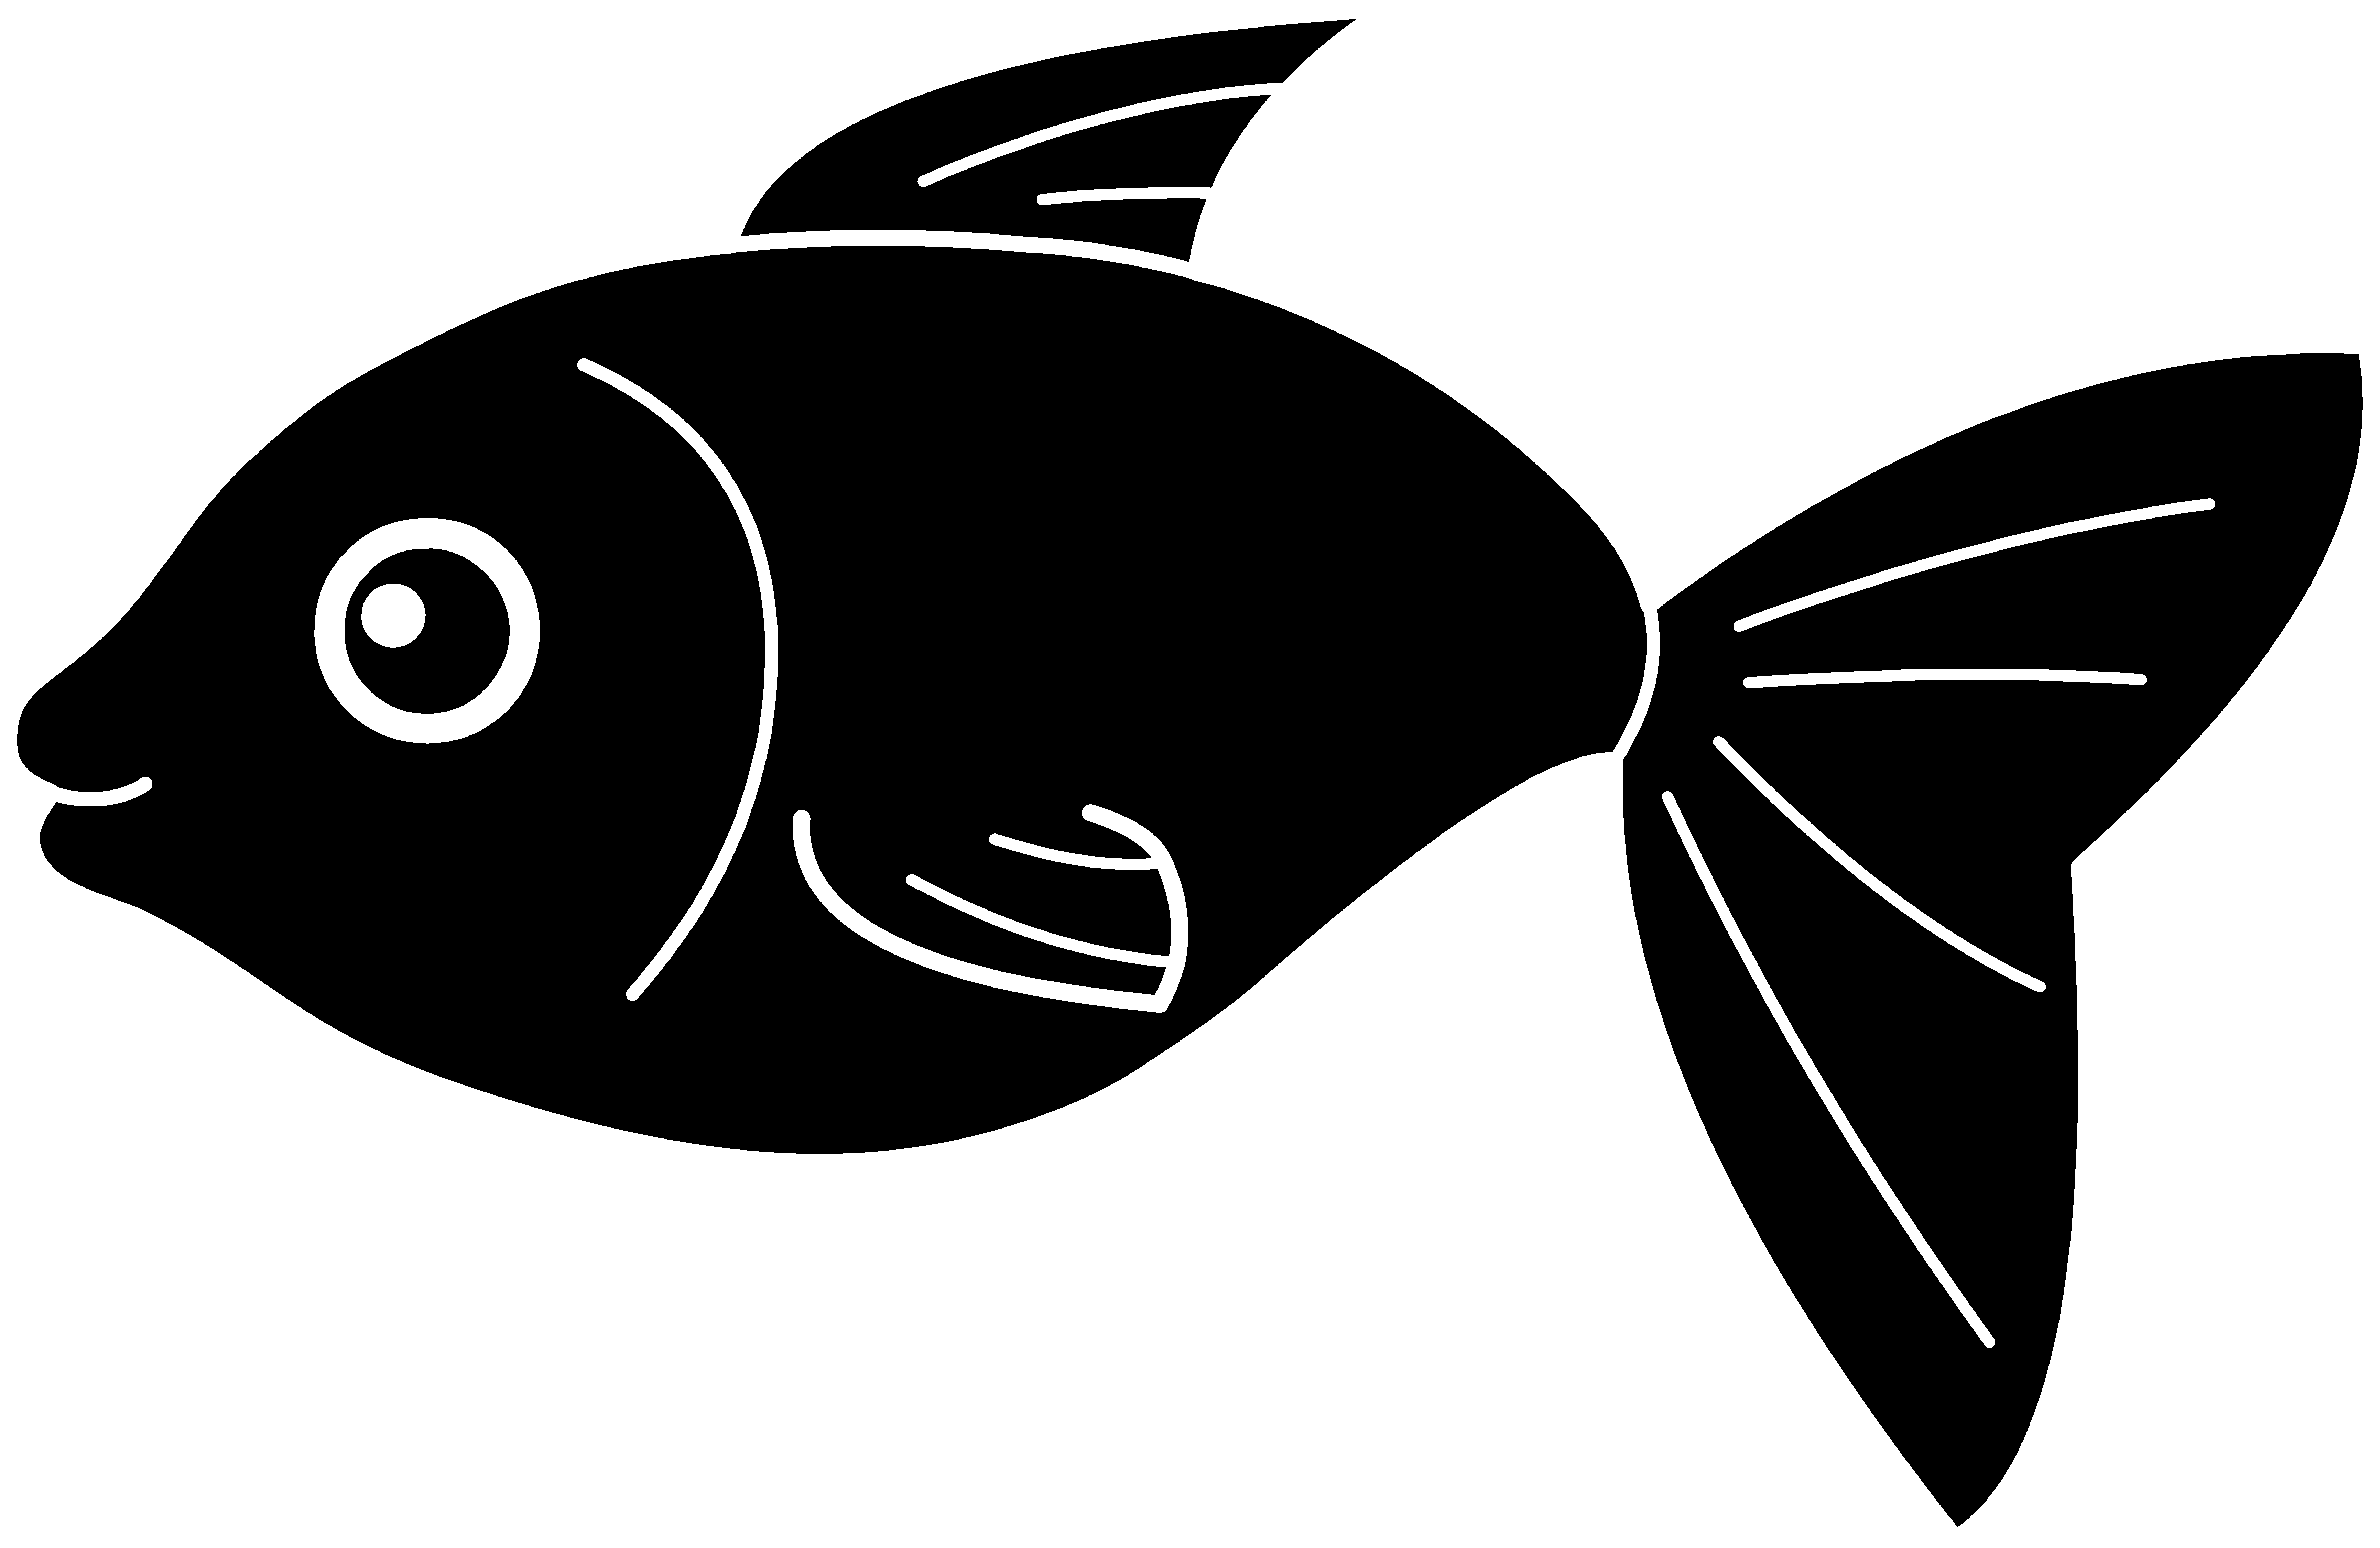 Free Fish Silhouette Svg, Download Free Fish Silhouette Svg png images, Free  ClipArts on Clipart Library